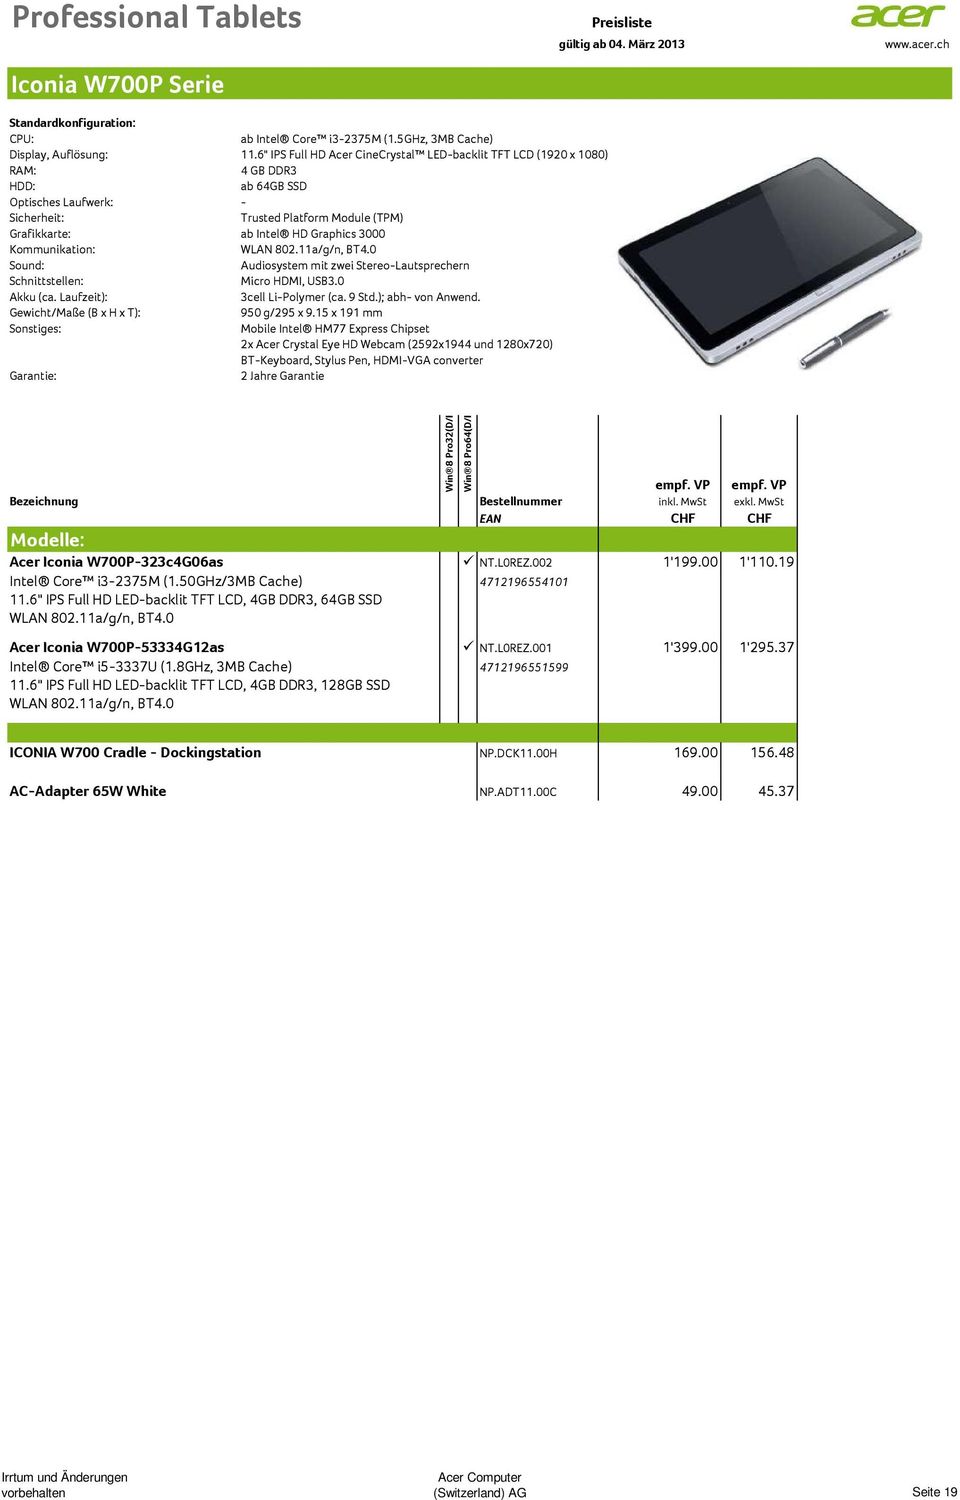 11a/g/n, BT4.0 Micro HDMI, USB3.0 3cell Li-Polymer (ca. 9 Std.); abh- von Anwend. Gewicht/Maße (B x H x T): 950 g/295 x 9.